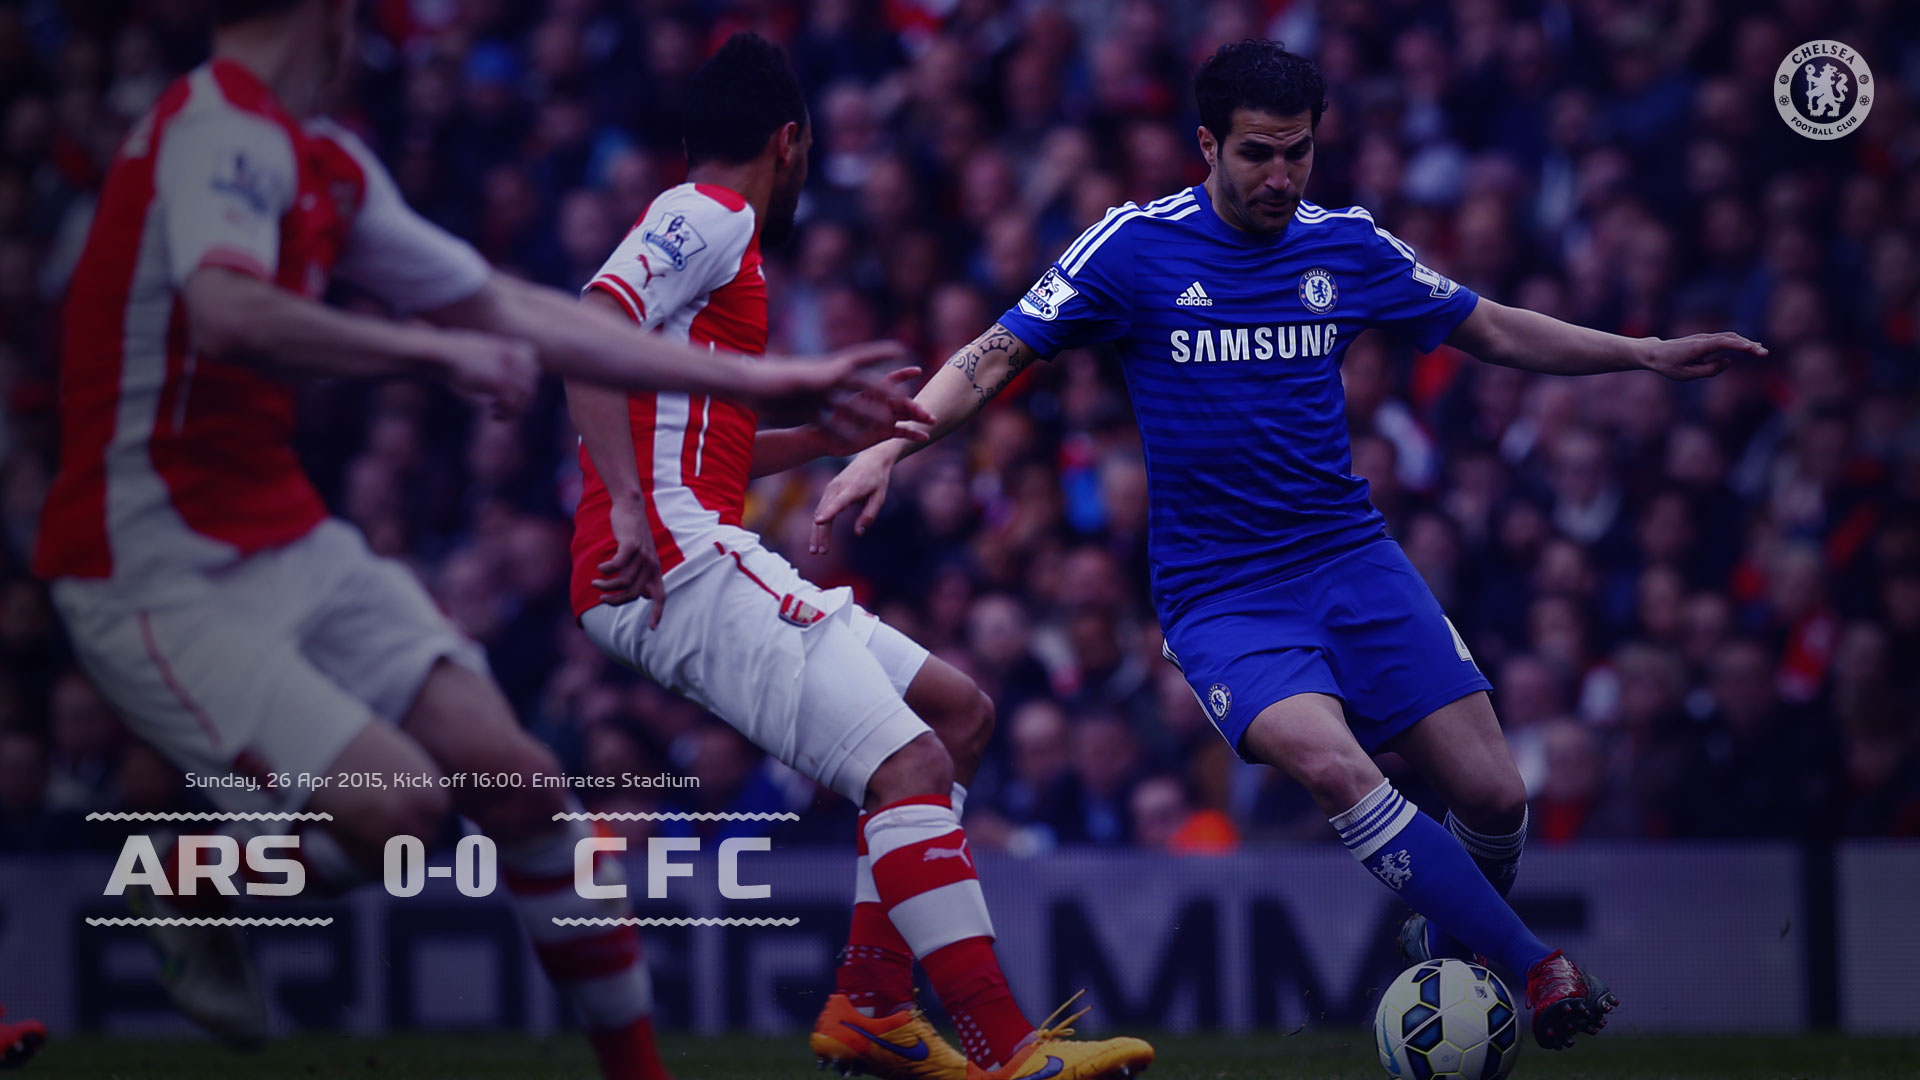 Arsenal 0-0 Chelsea, BPL 26 Apr 2015